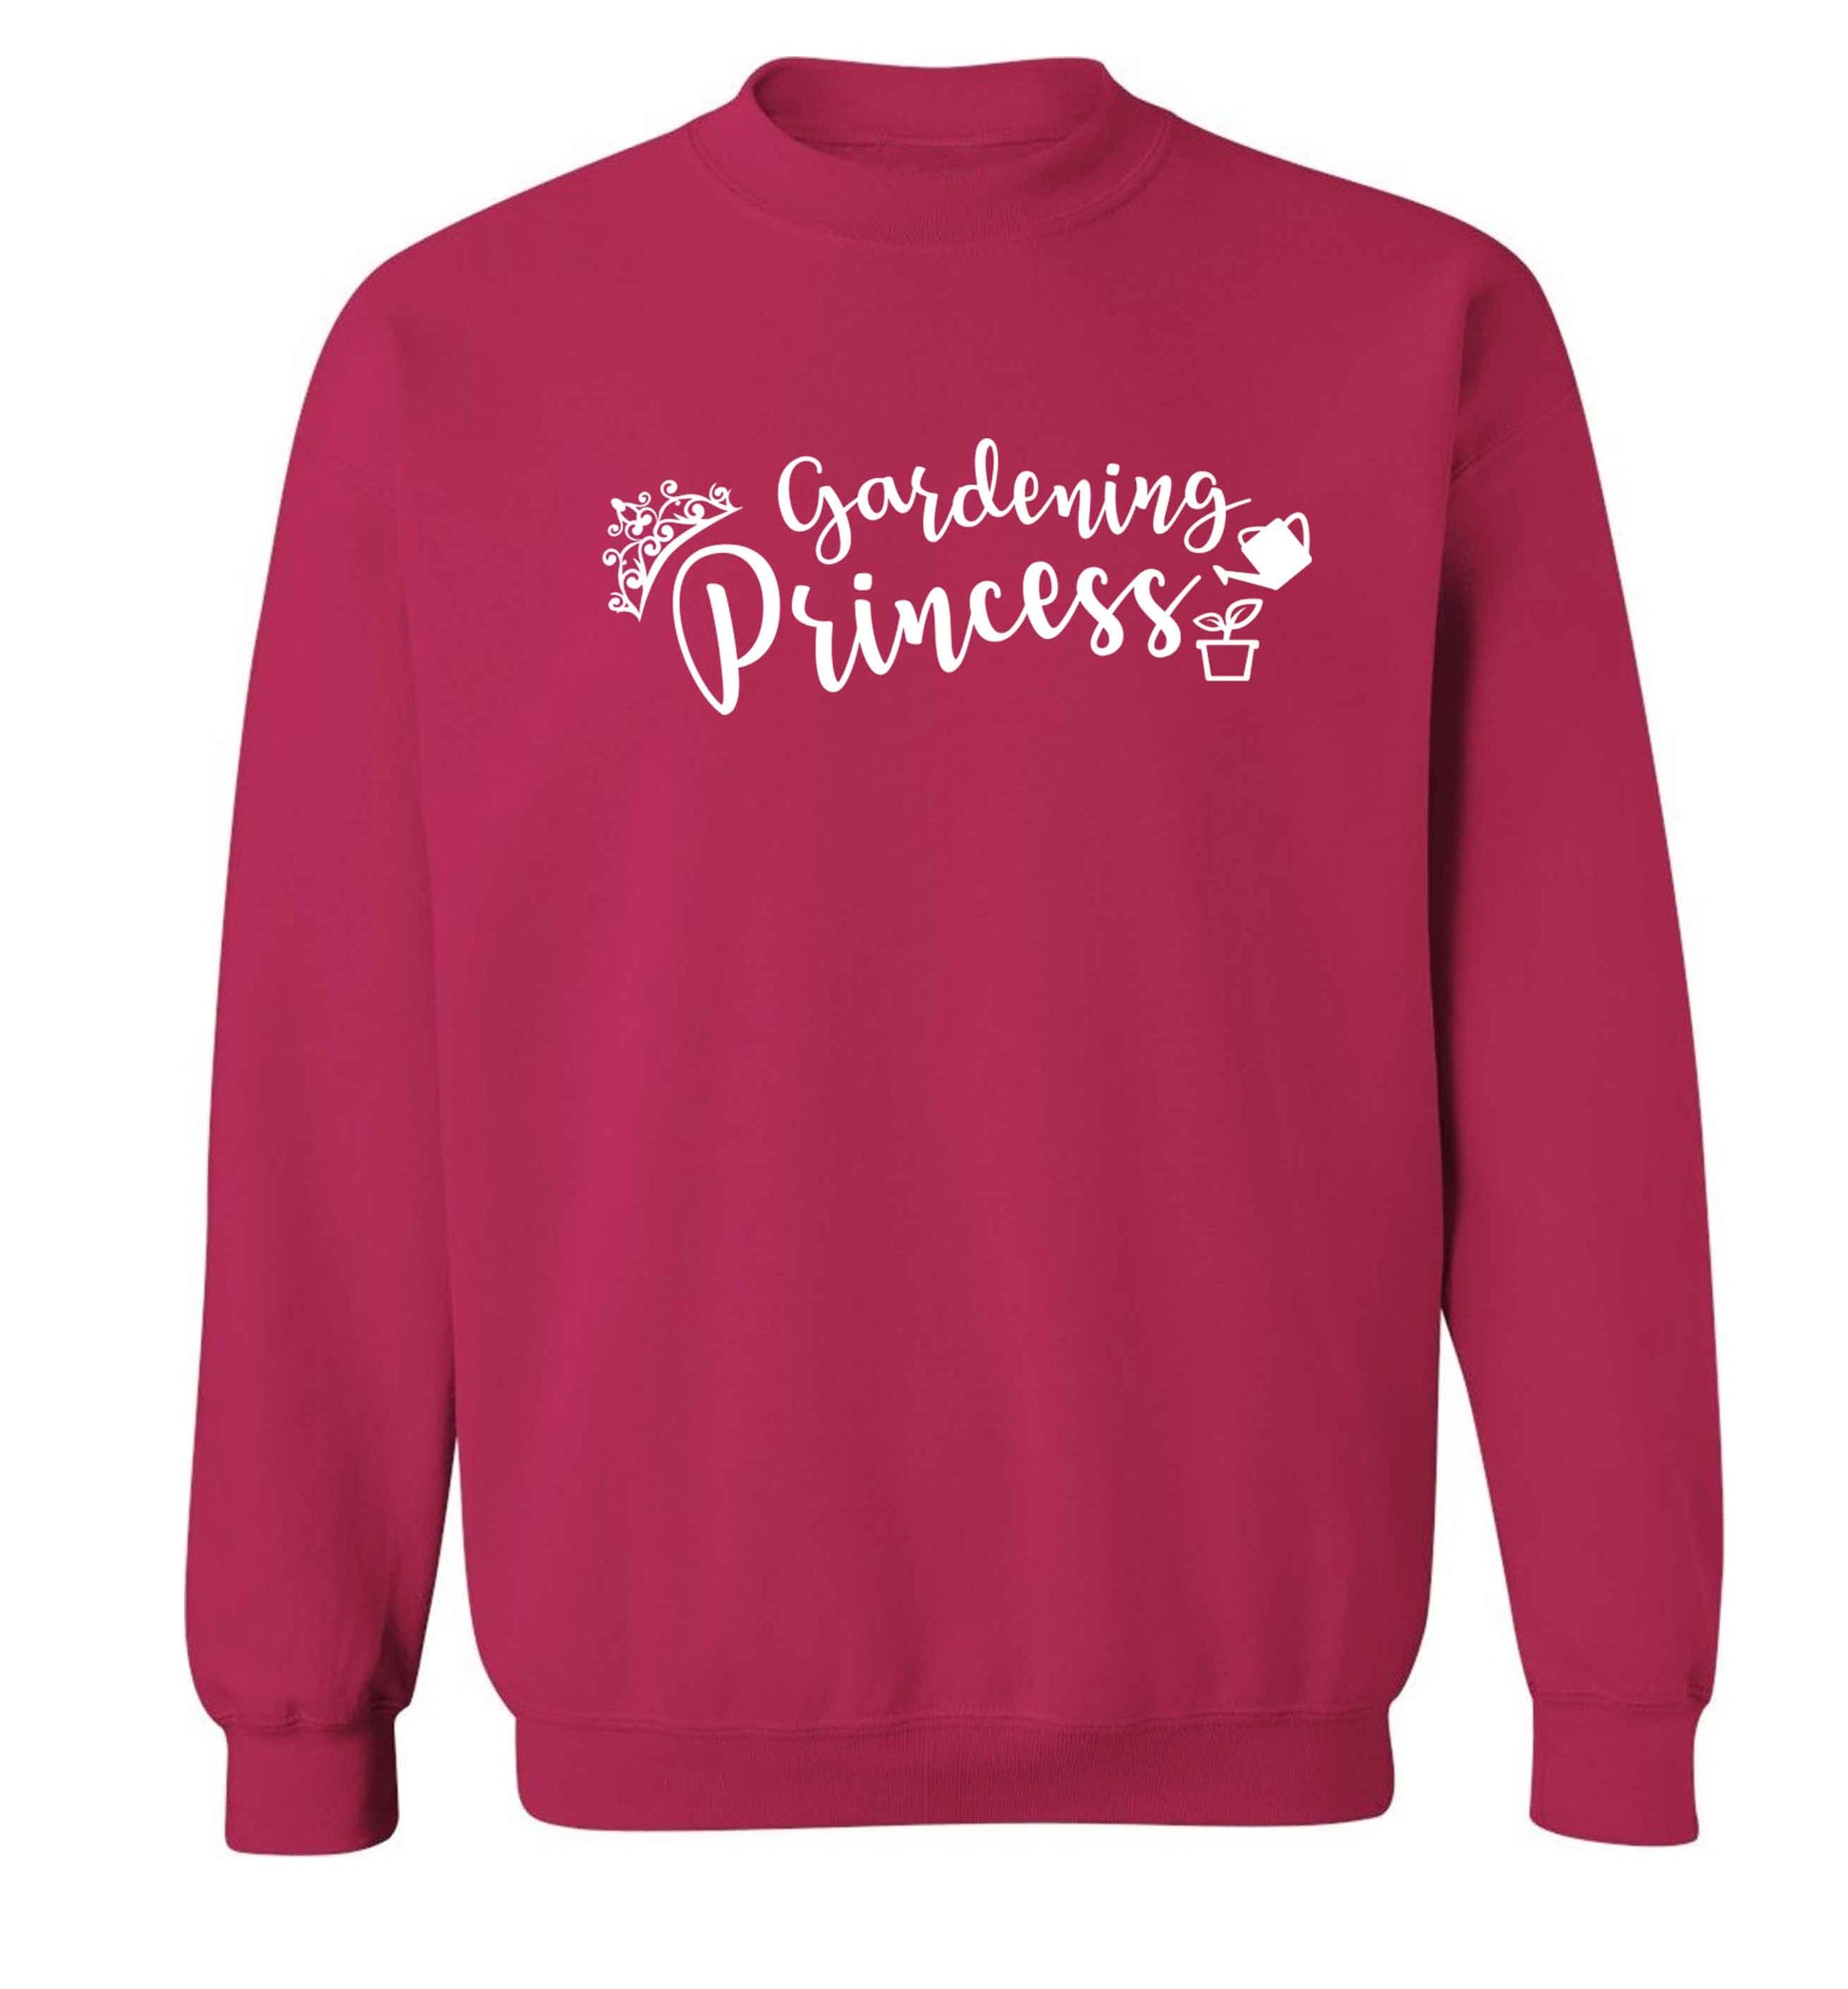 Gardening princess Adult's unisex pink Sweater 2XL